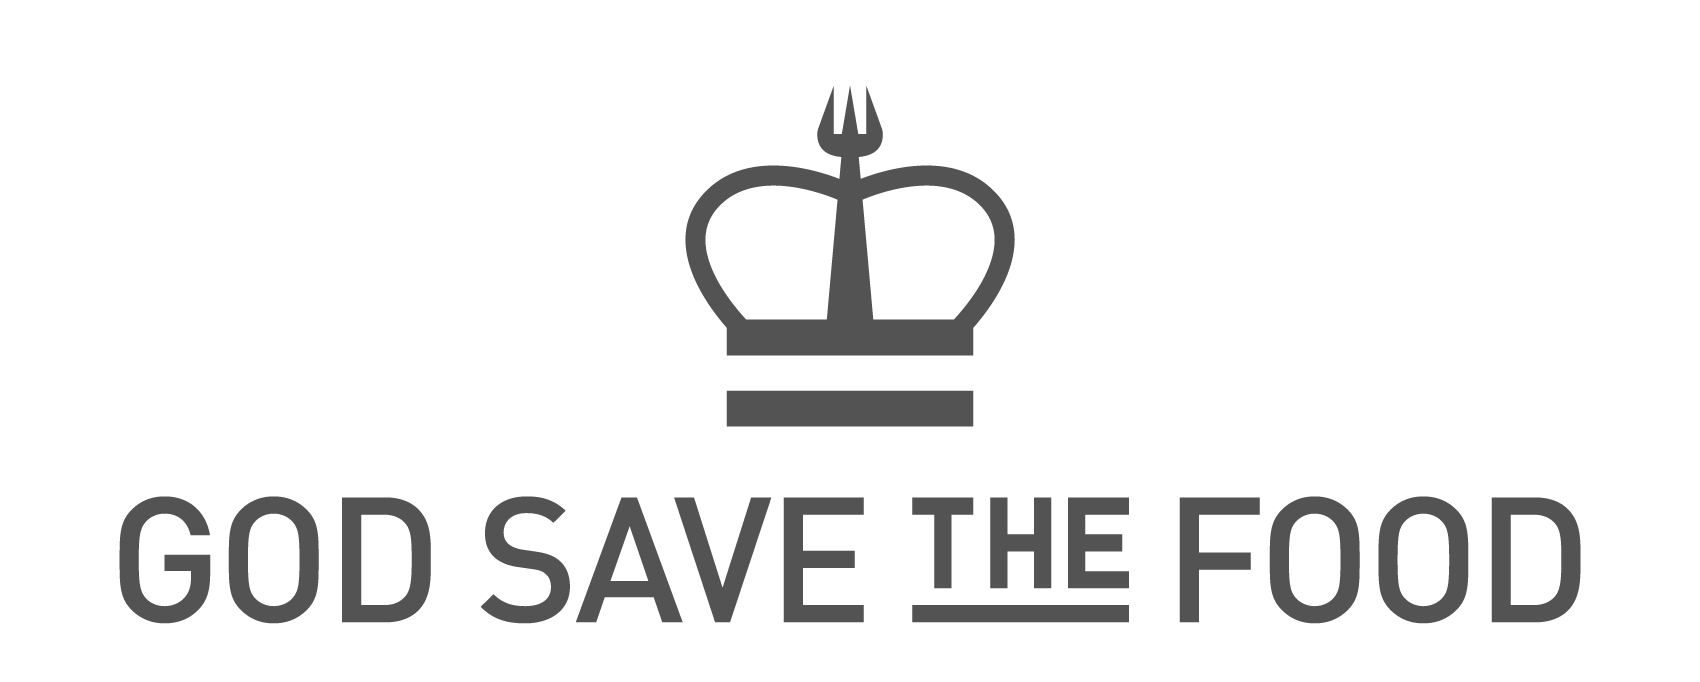 Brand logo for God Save The Food